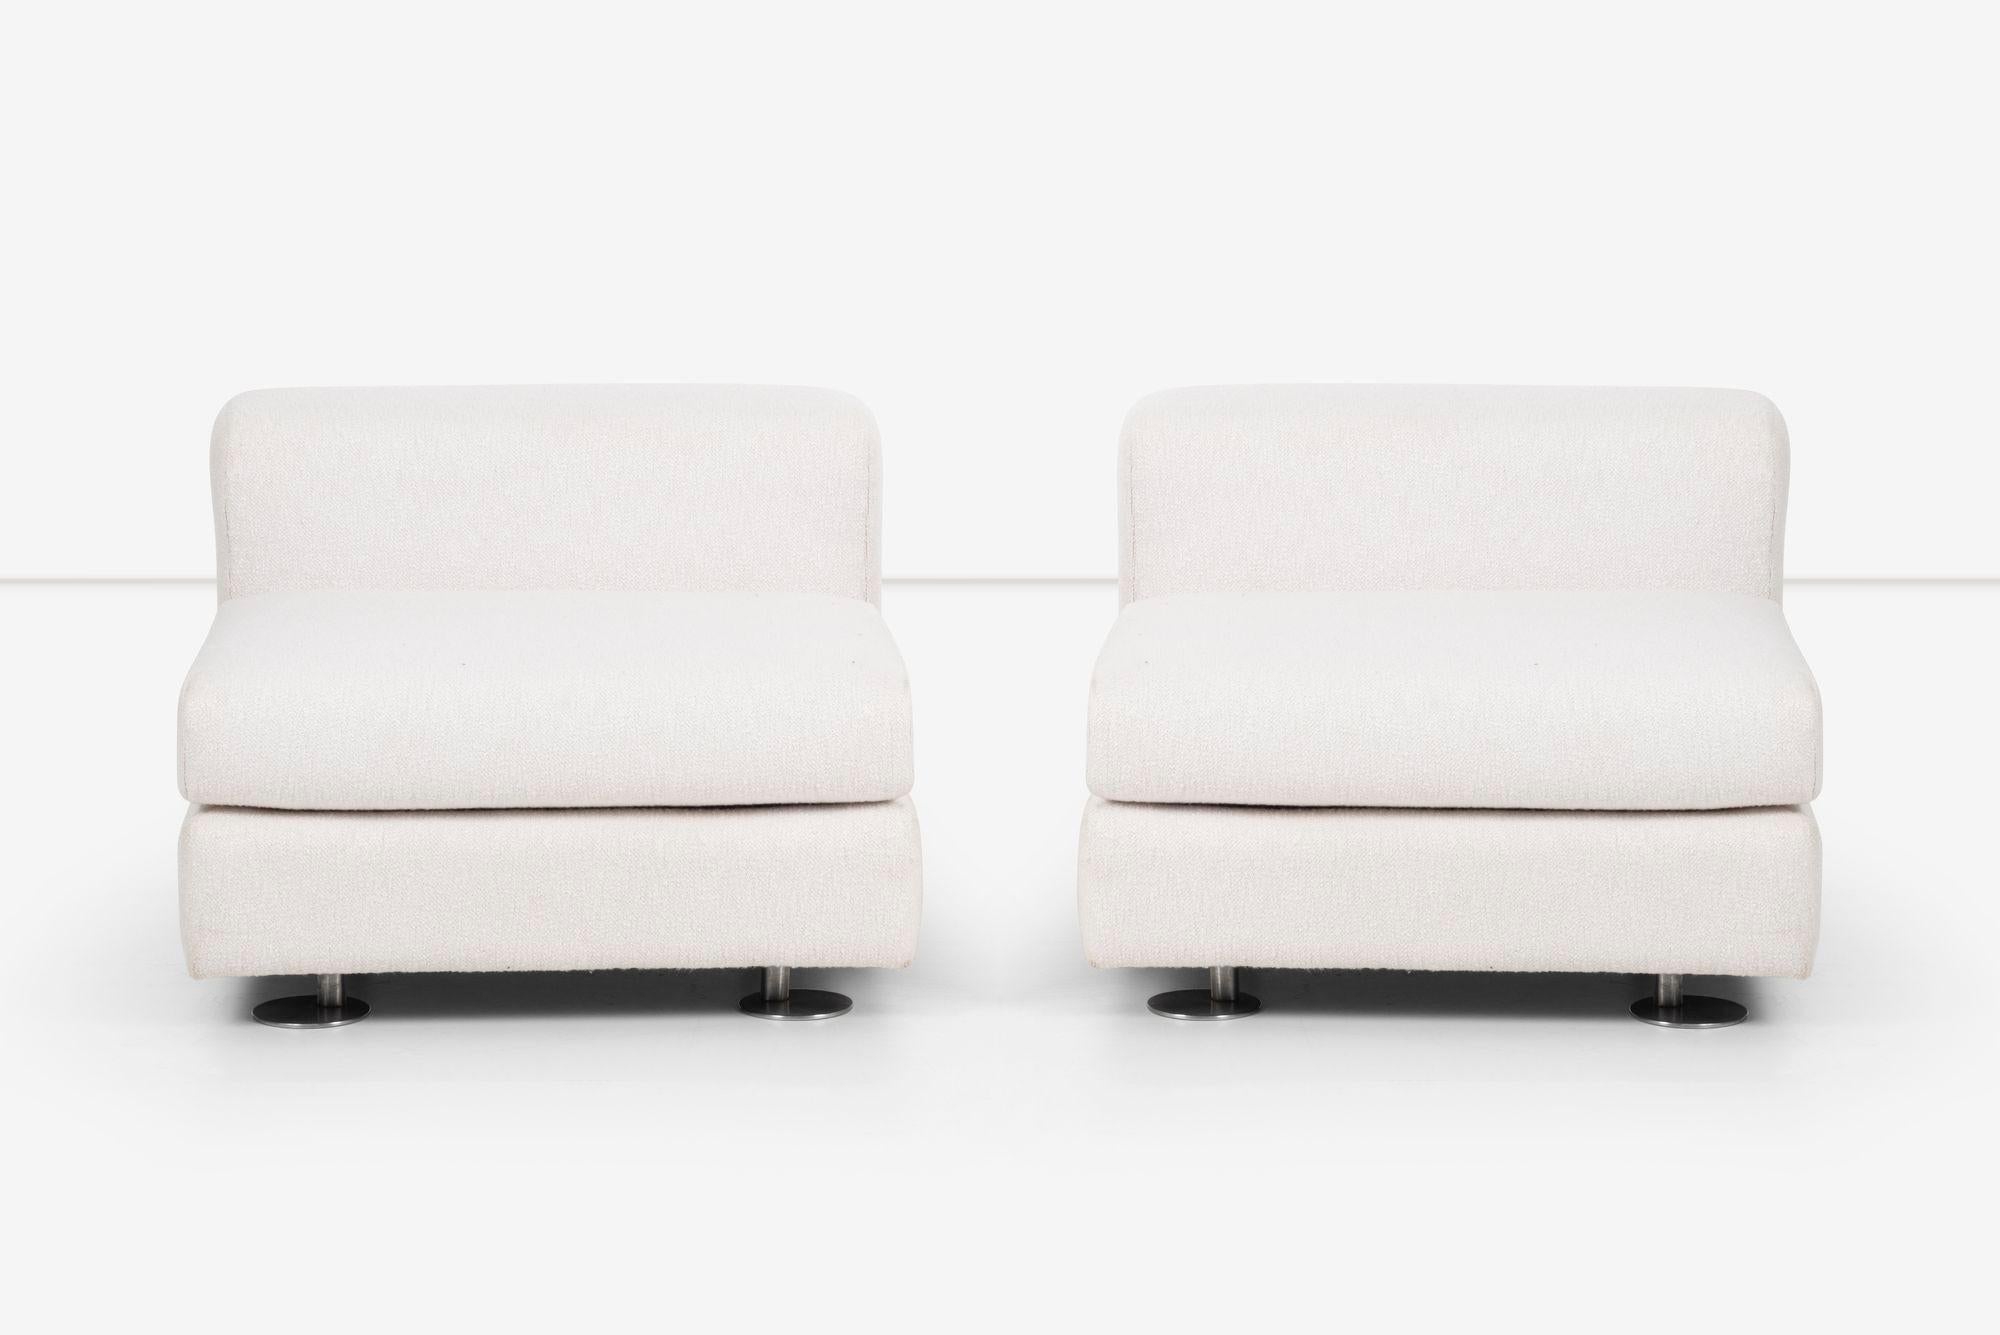 Pair of Osvaldo Borsani lounge chairs manufactured by Tecno 1966 Chrome plated round disc feet, reupholstered in Italian boucle.
Borsani commissioned for Joseph James Akston, La Rotunda House Palm Beach, Florida
Seat height 16